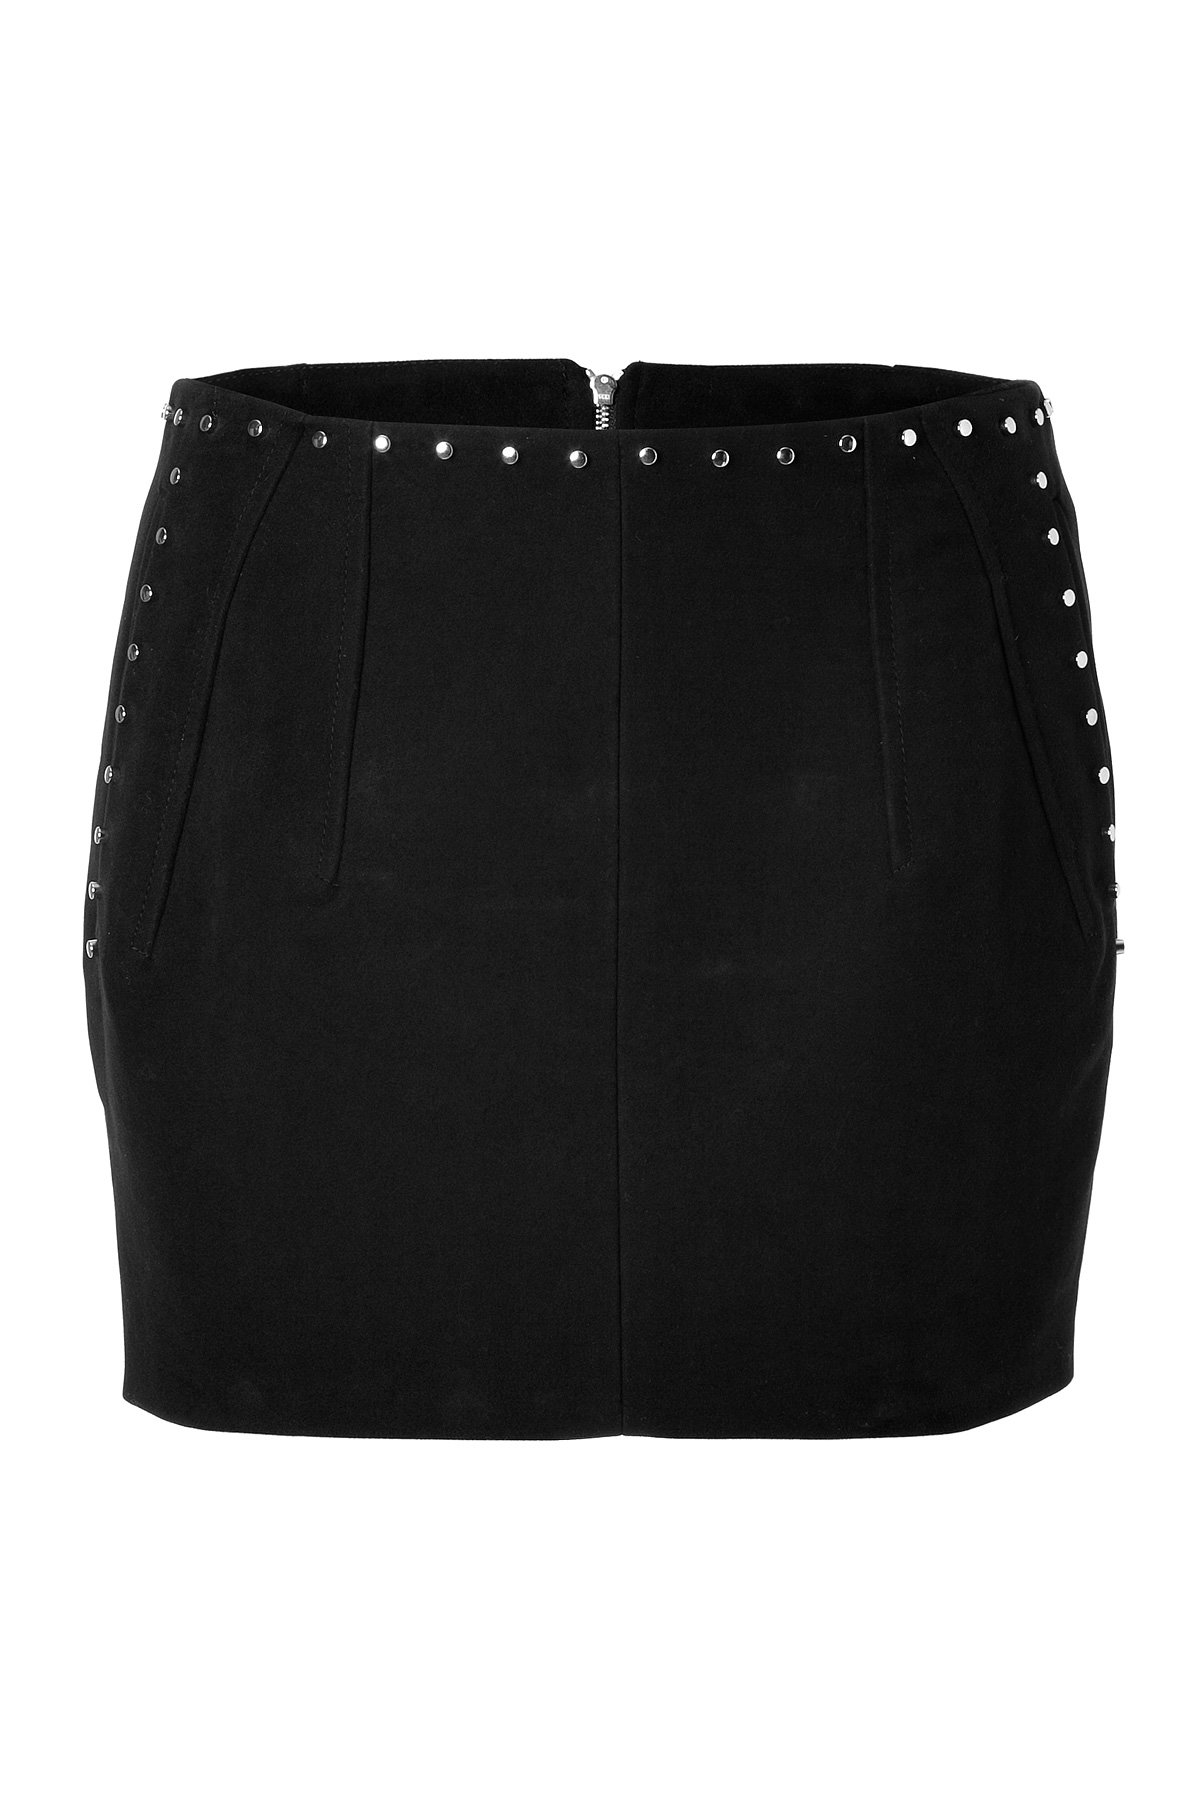 Faith Connexion - Cotton Studded Mini-Skirt in Black